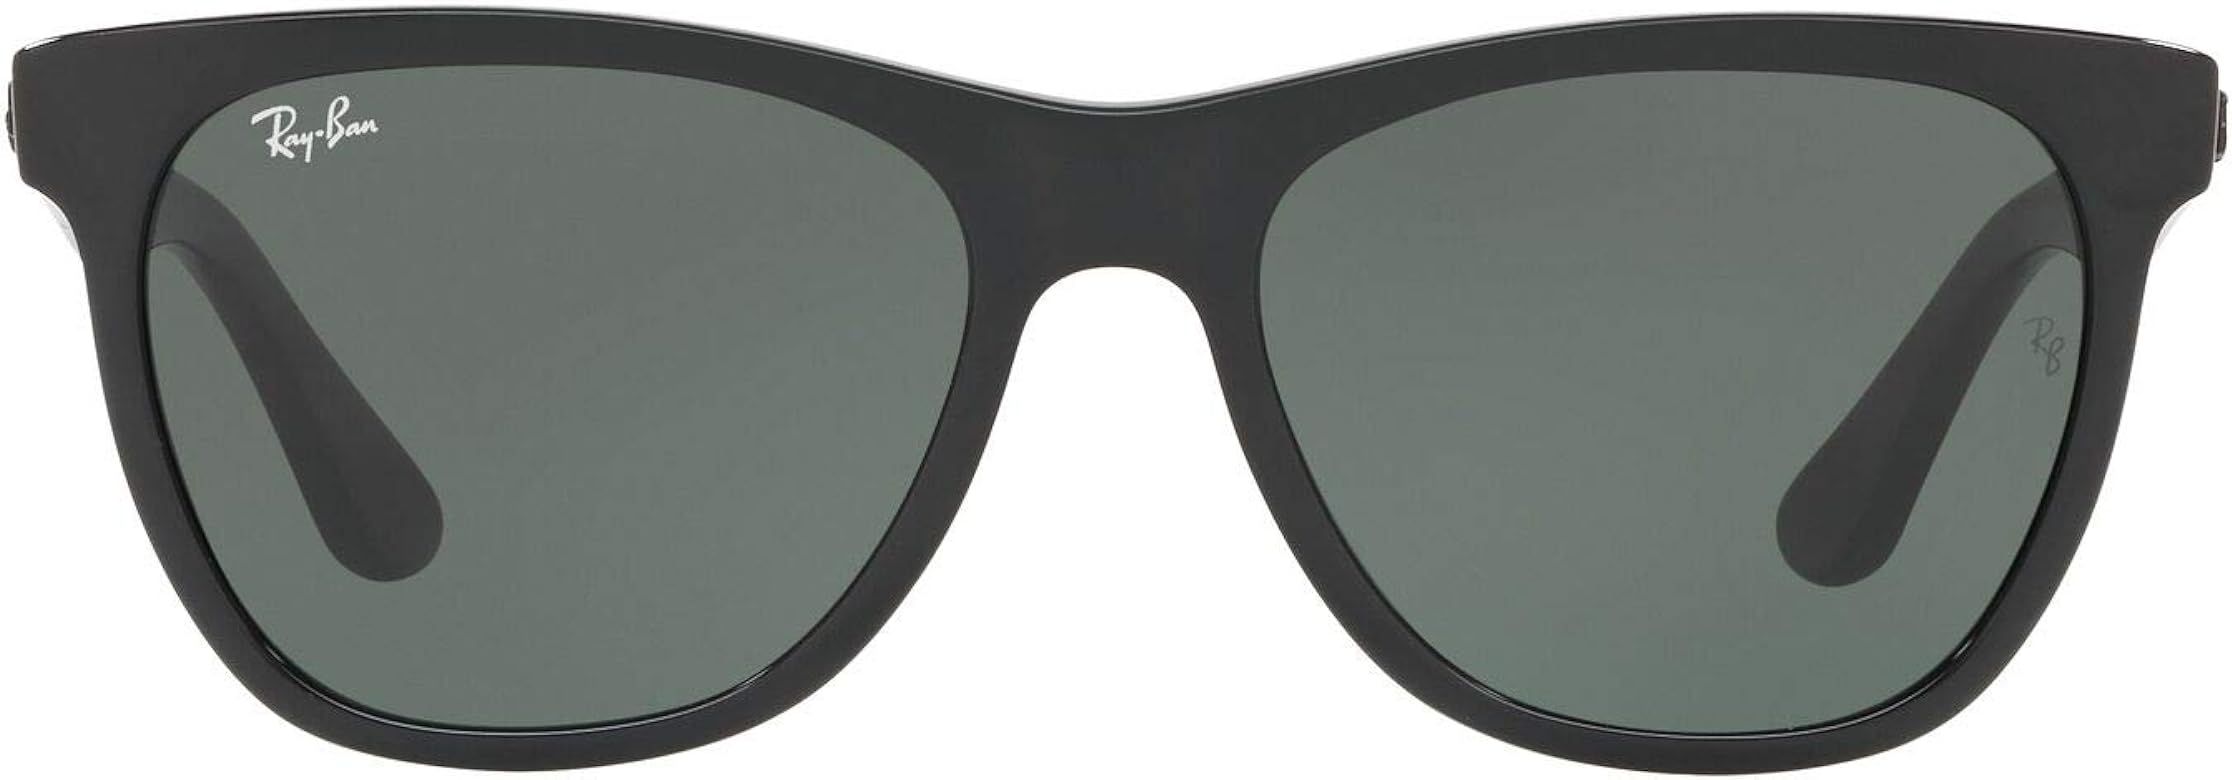 Ray-Ban RB4184 Square Sunglasses, Black/Green, 54 mm | Amazon (US)